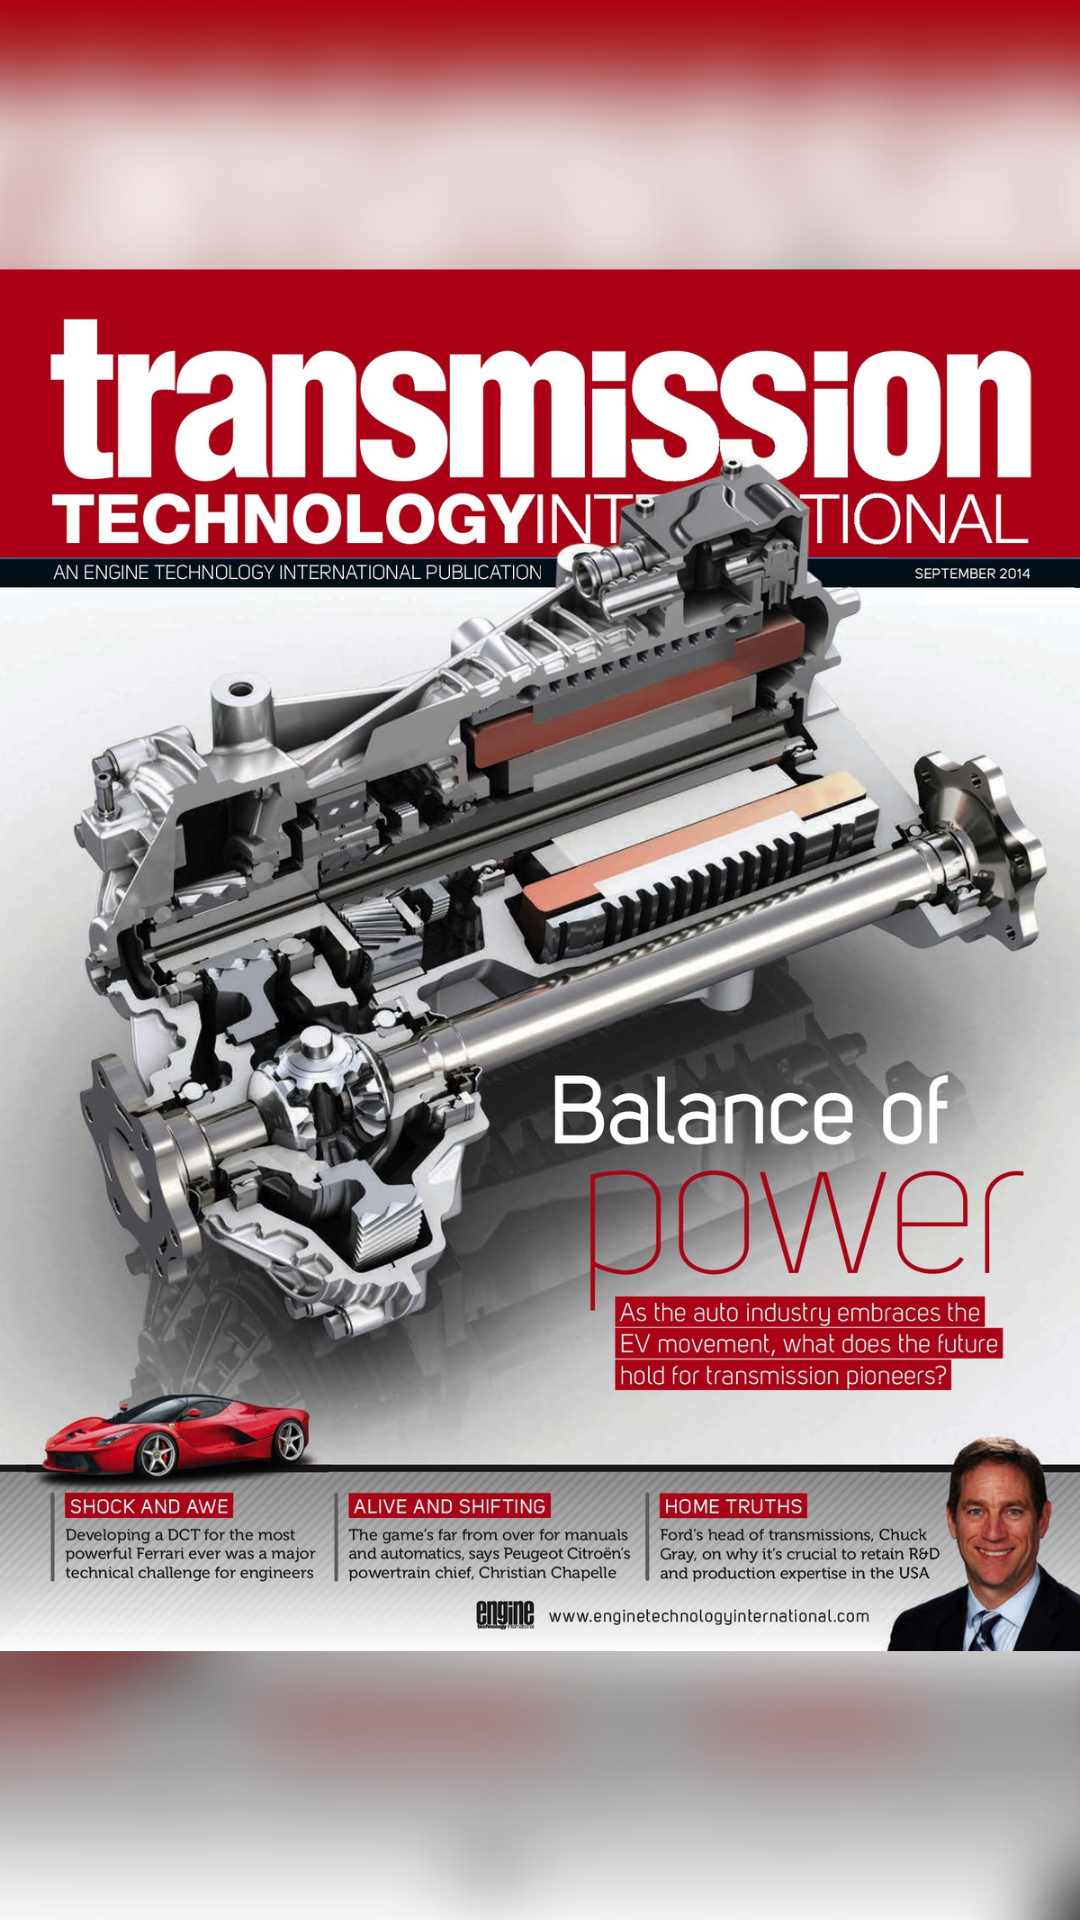 Transmission Technology International September 2014 'Balance of Power' front cover.